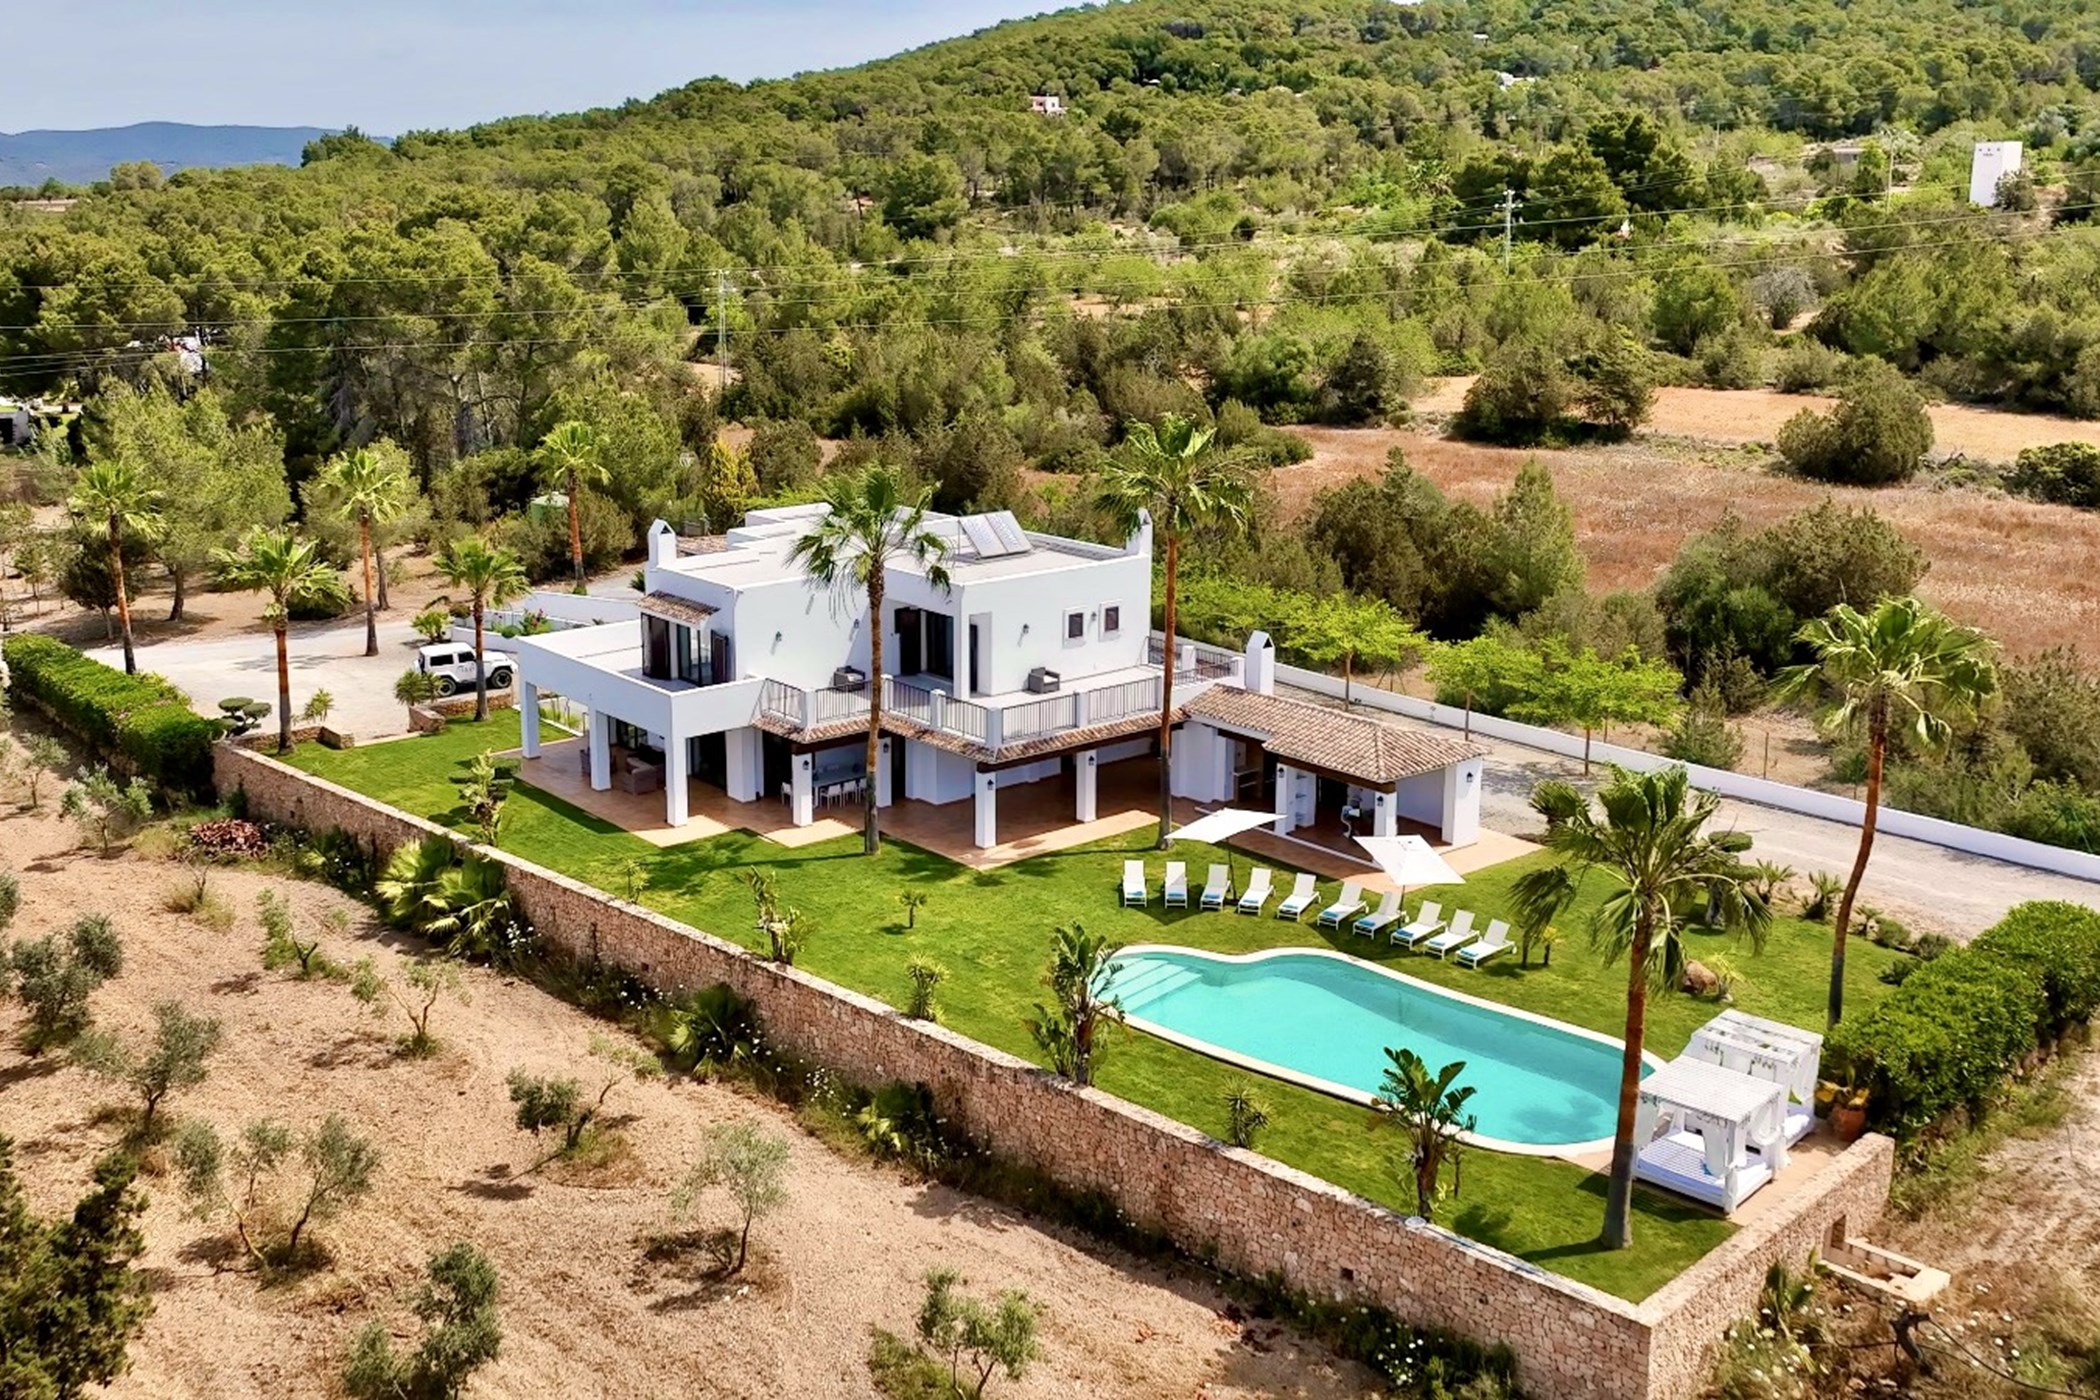 Beautiful country villa located between Ibiza and San Antonio